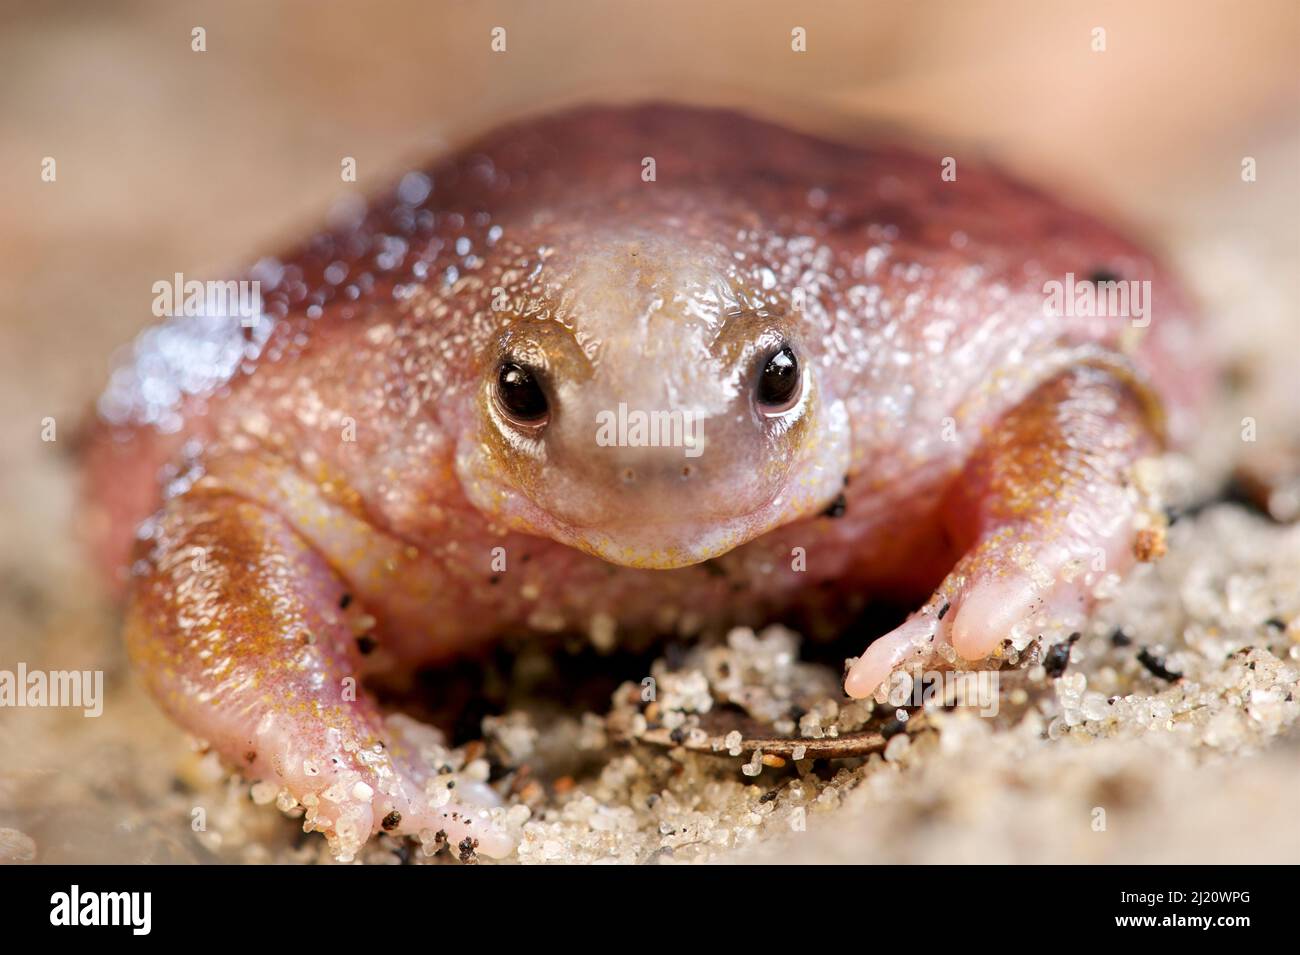 Turtle frog (Myobatrachus gouldii) portrait. Perth, Western Australia. October. Stock Photo